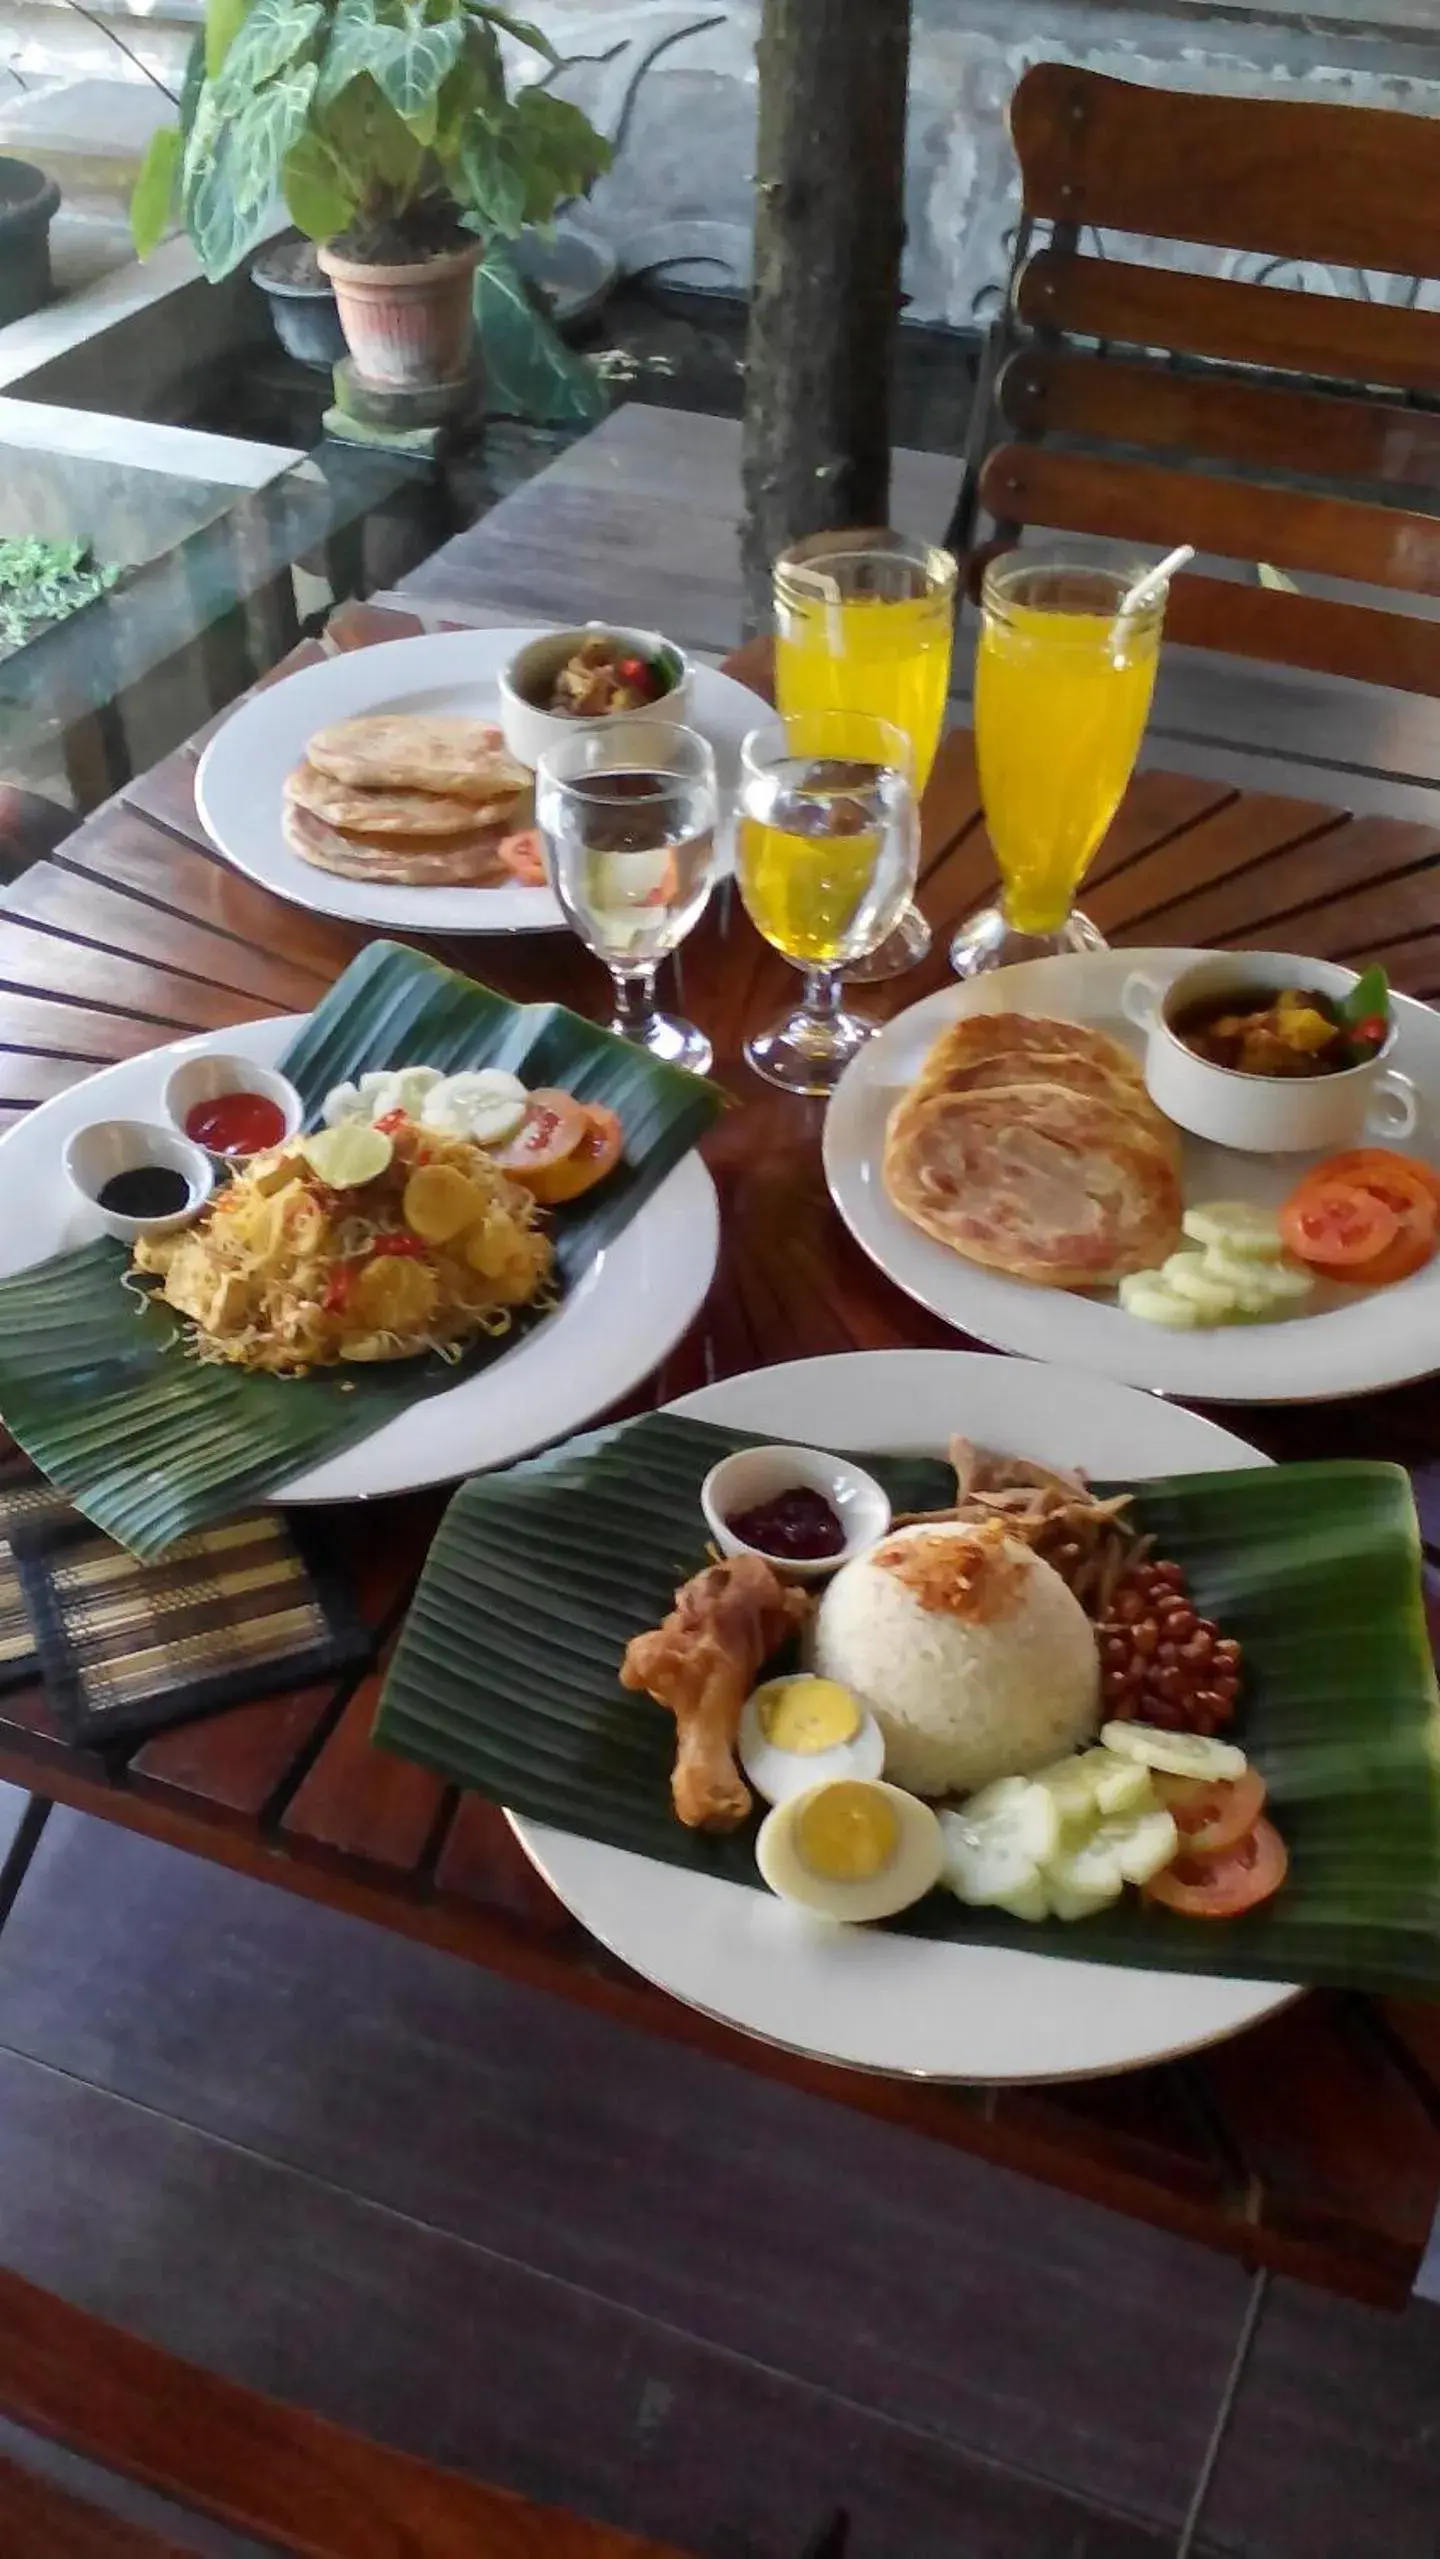 Breakfast in Balai Melayu Hotel